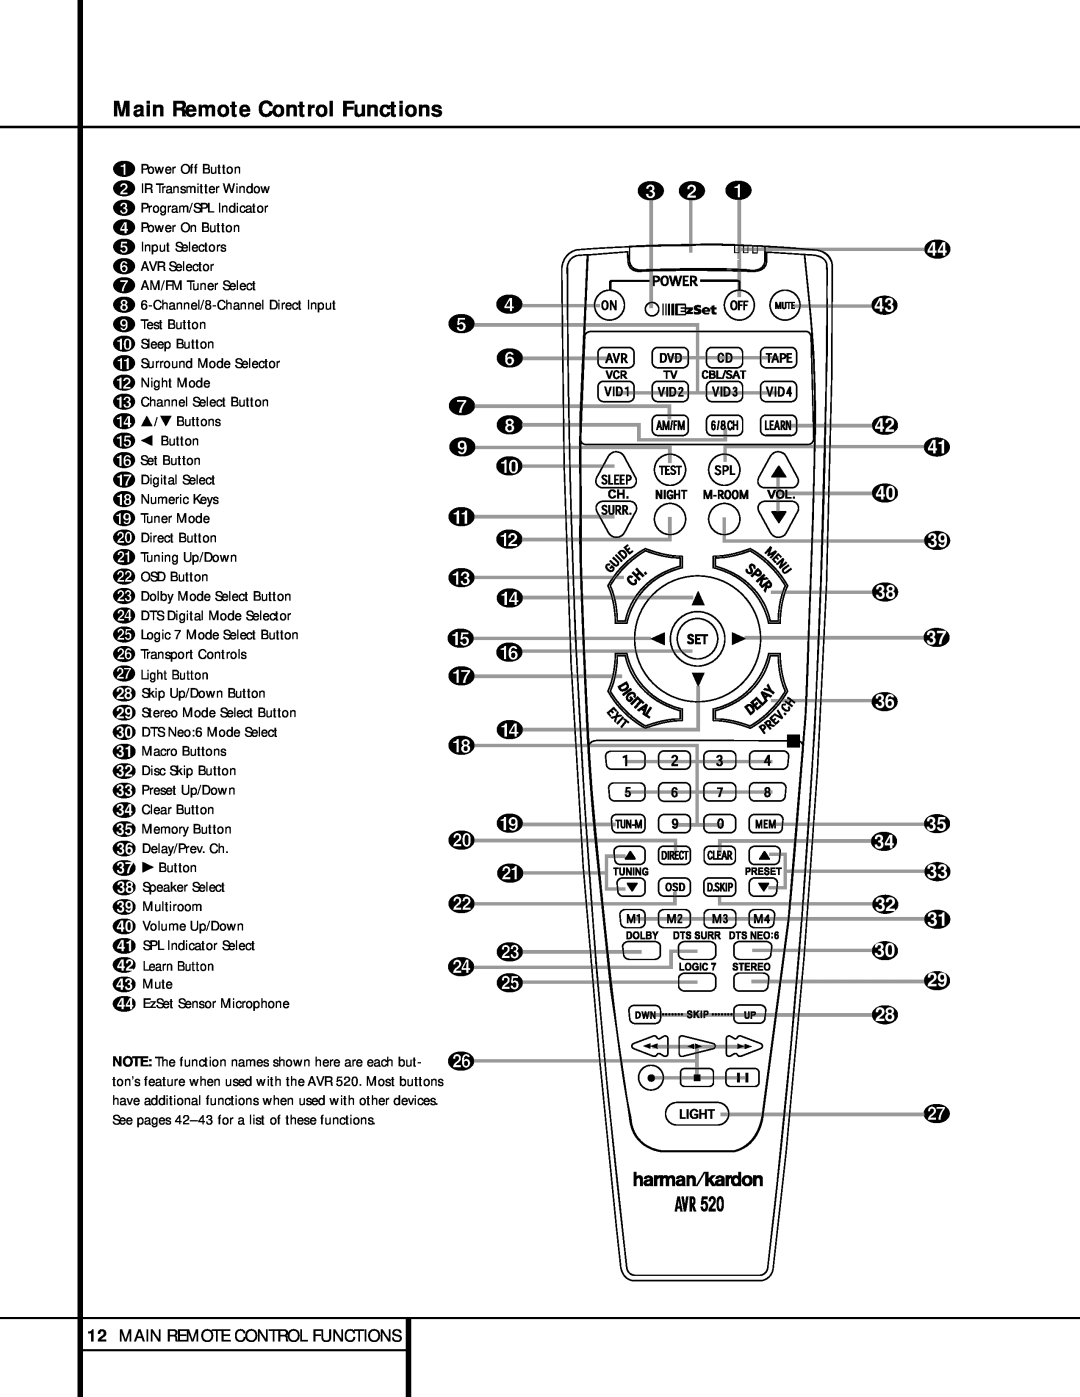 Harman-Kardon AVR 520 owner manual Main Remote Control Functions, 12MAIN REMOTE CONTROL FUNCTIONS, c b a 